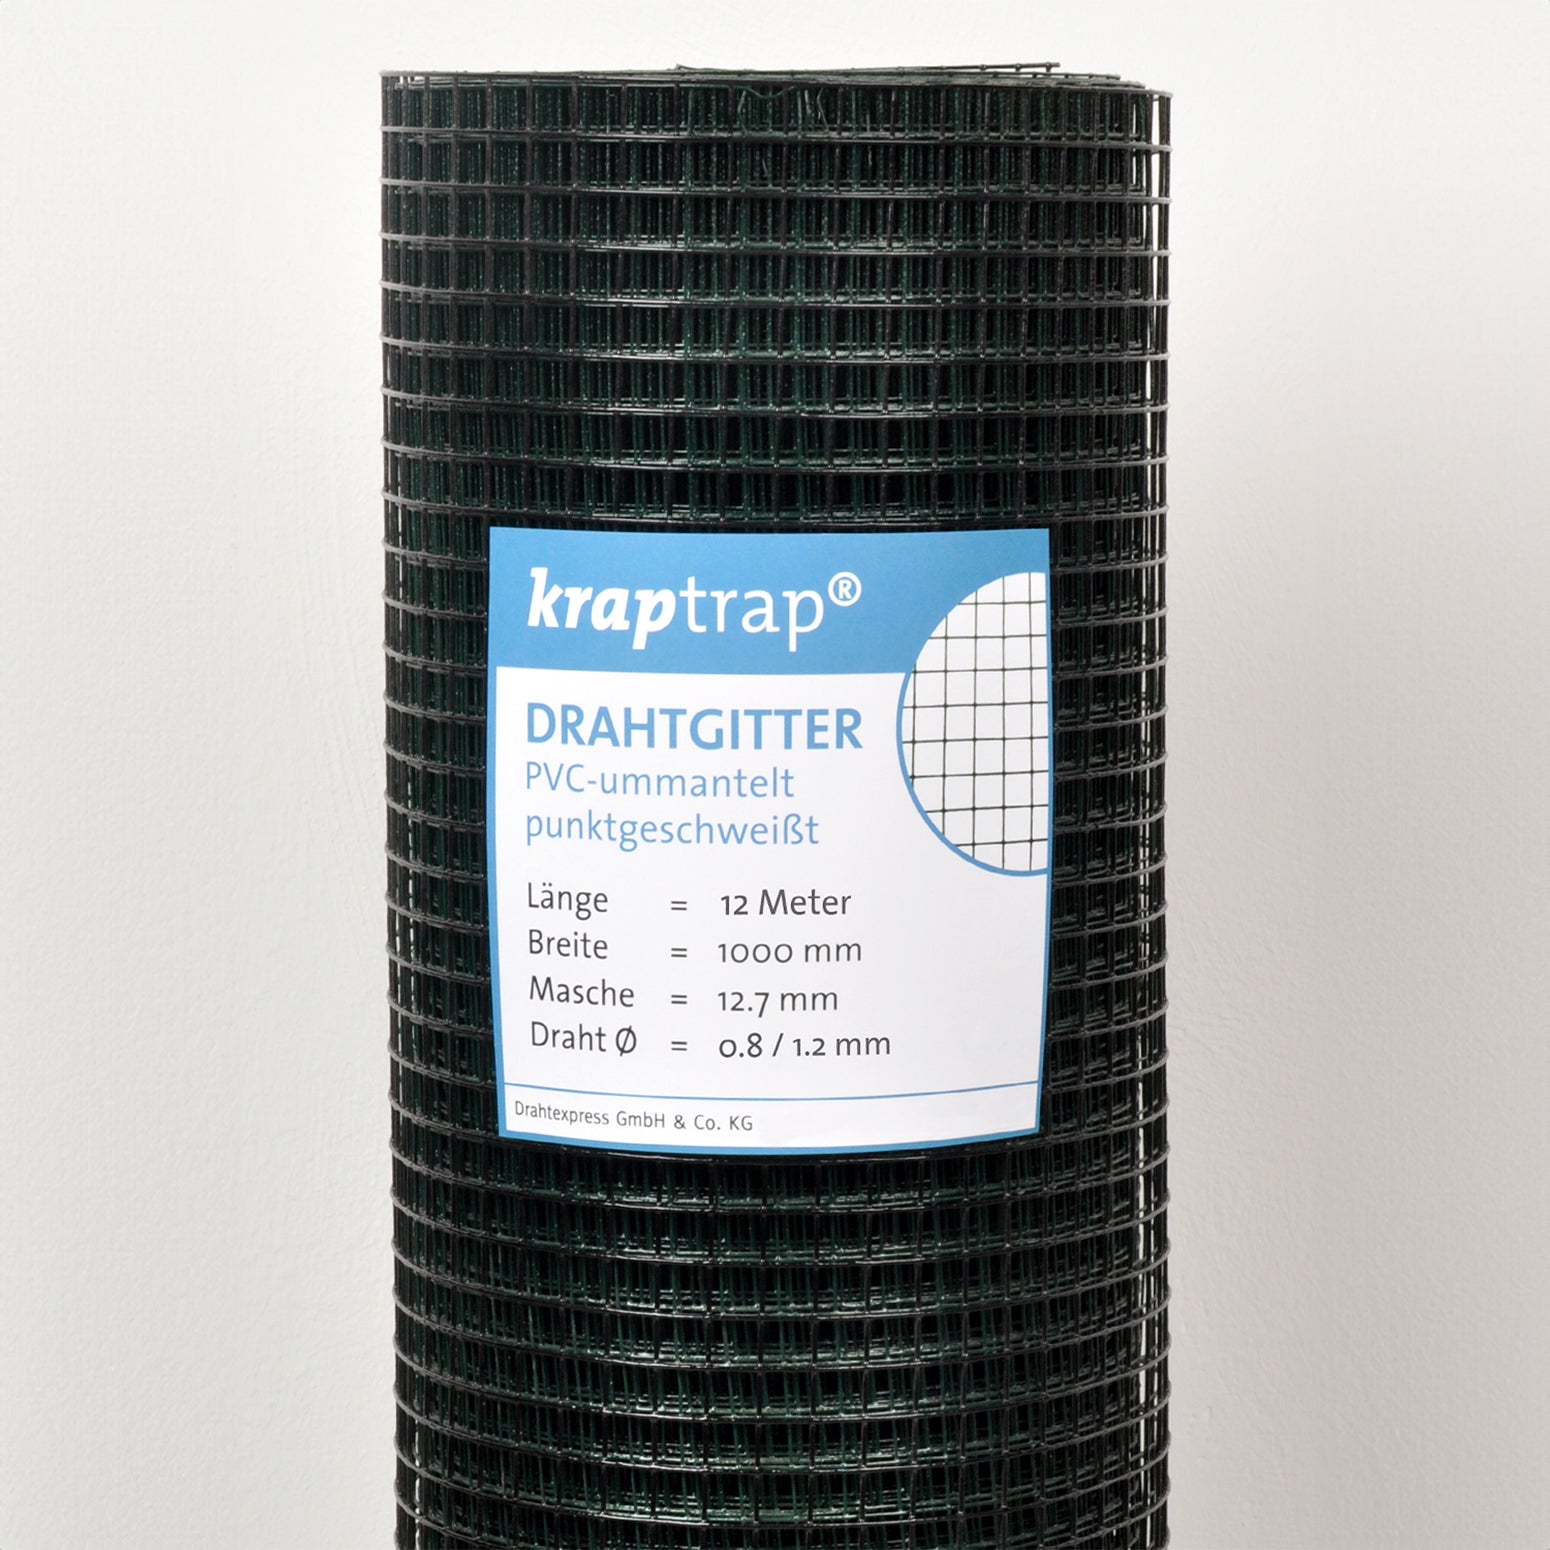 Kraptrap® Volierendraht Drahtgitter 12,7 mm Masche, 100 cm breit, schwarz ummantelt